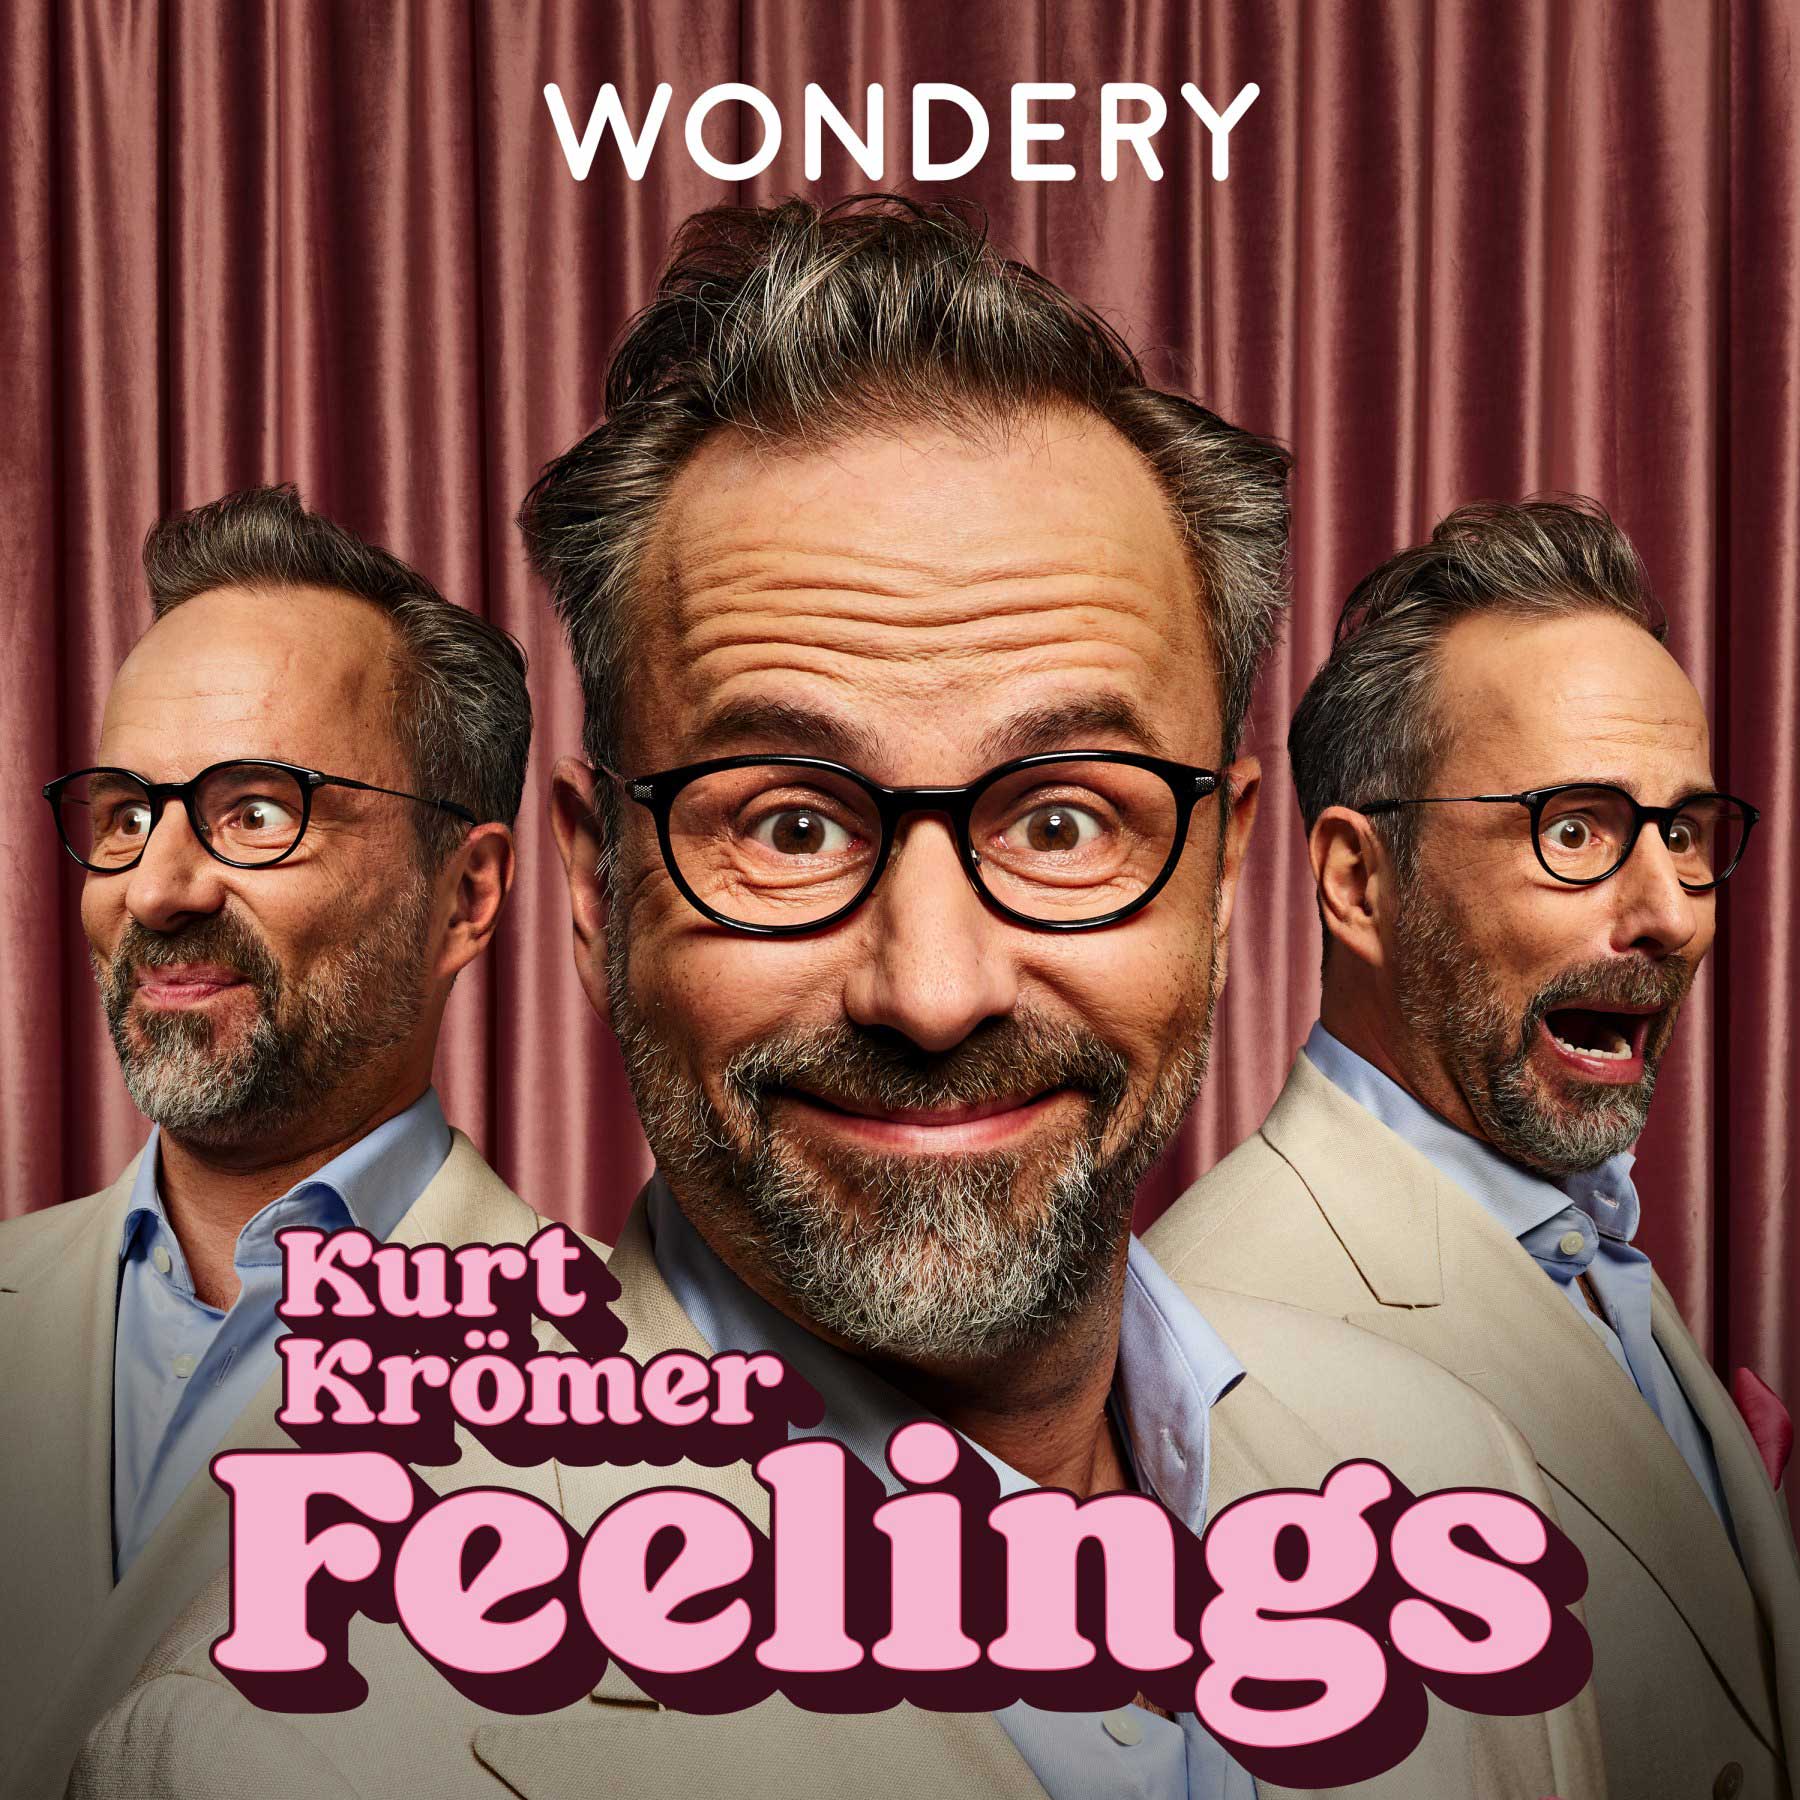 Kurt Krömer: Podcast "Feelings" hat jede Woche einen Überraschungsgast kurt-kroemer-feelings-podcast-01 